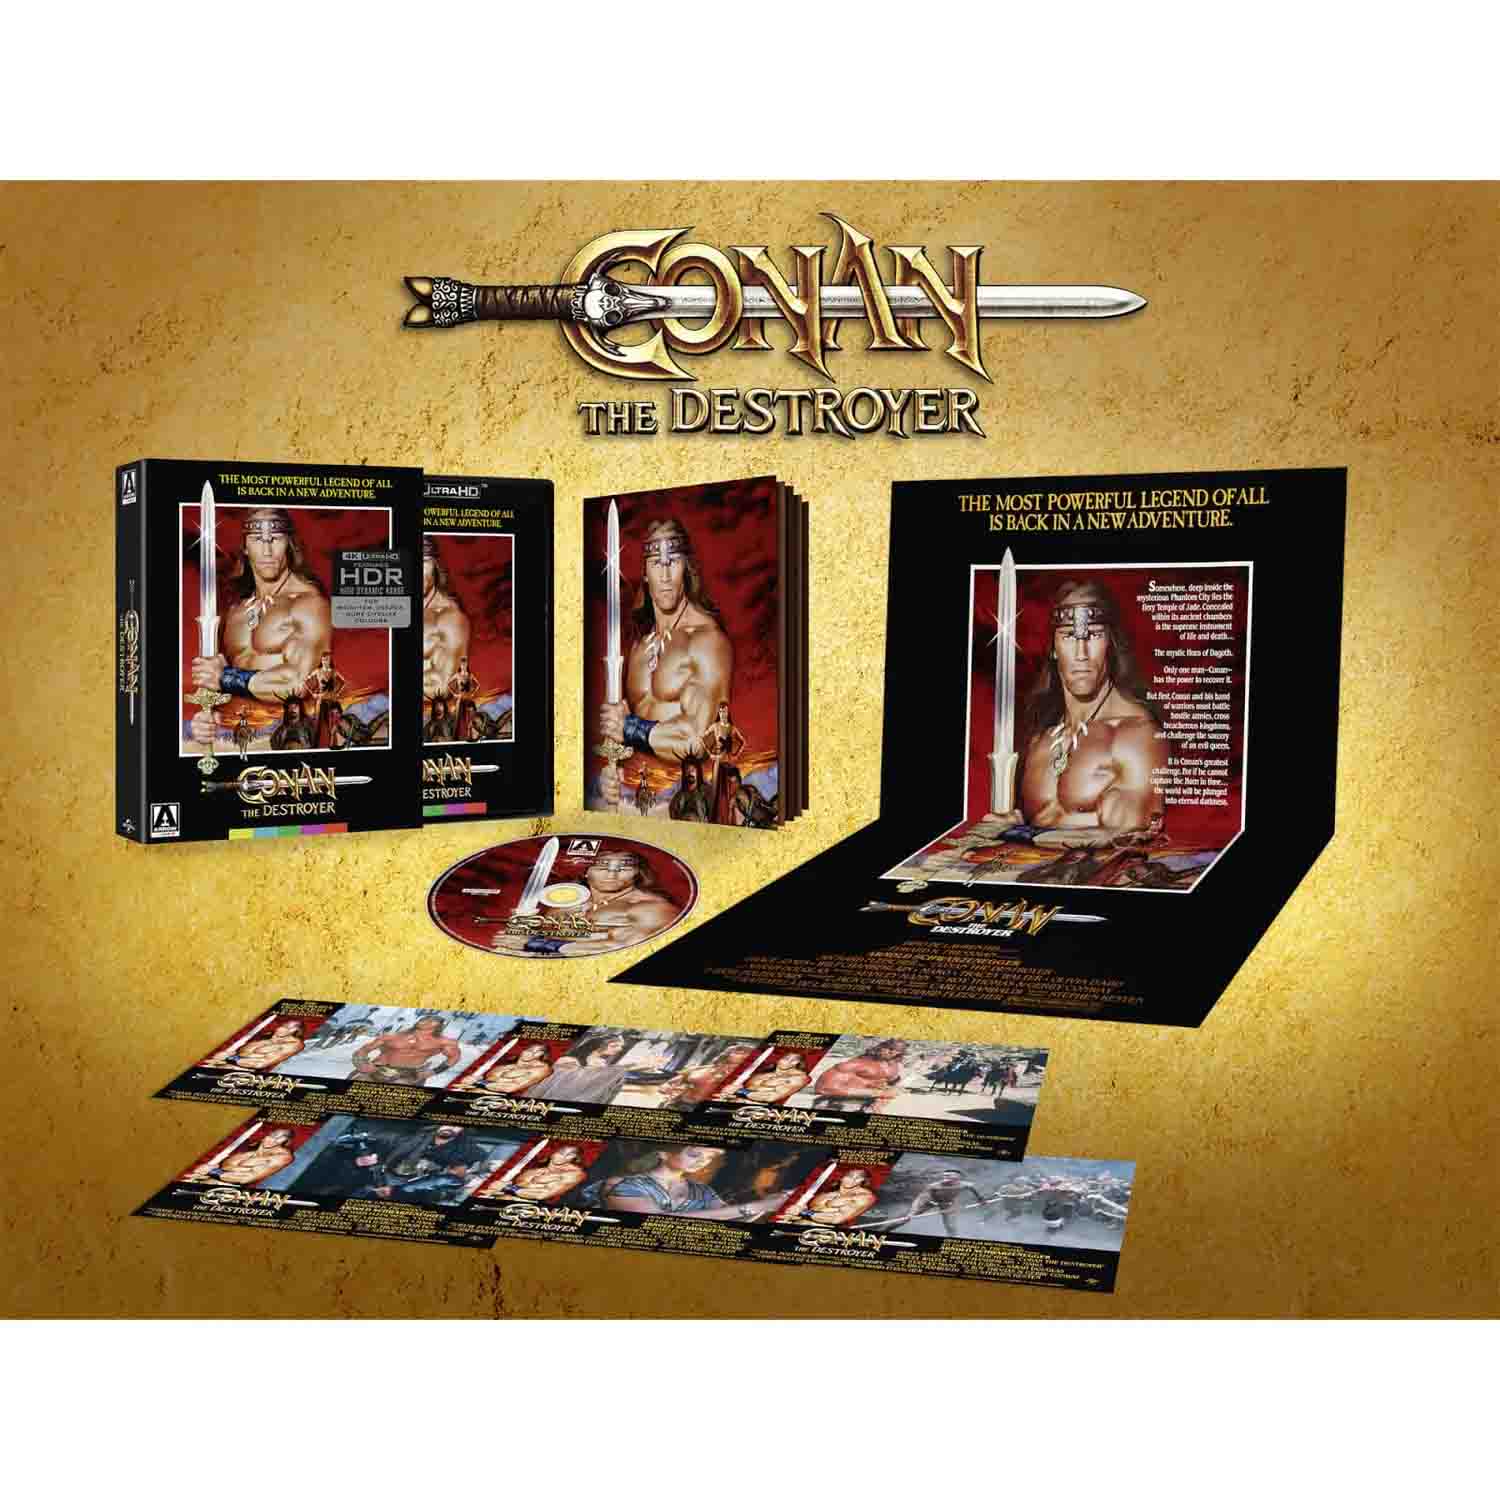 Conan the Destroyer Ltd. Ed. (USA Import) 4K UHD